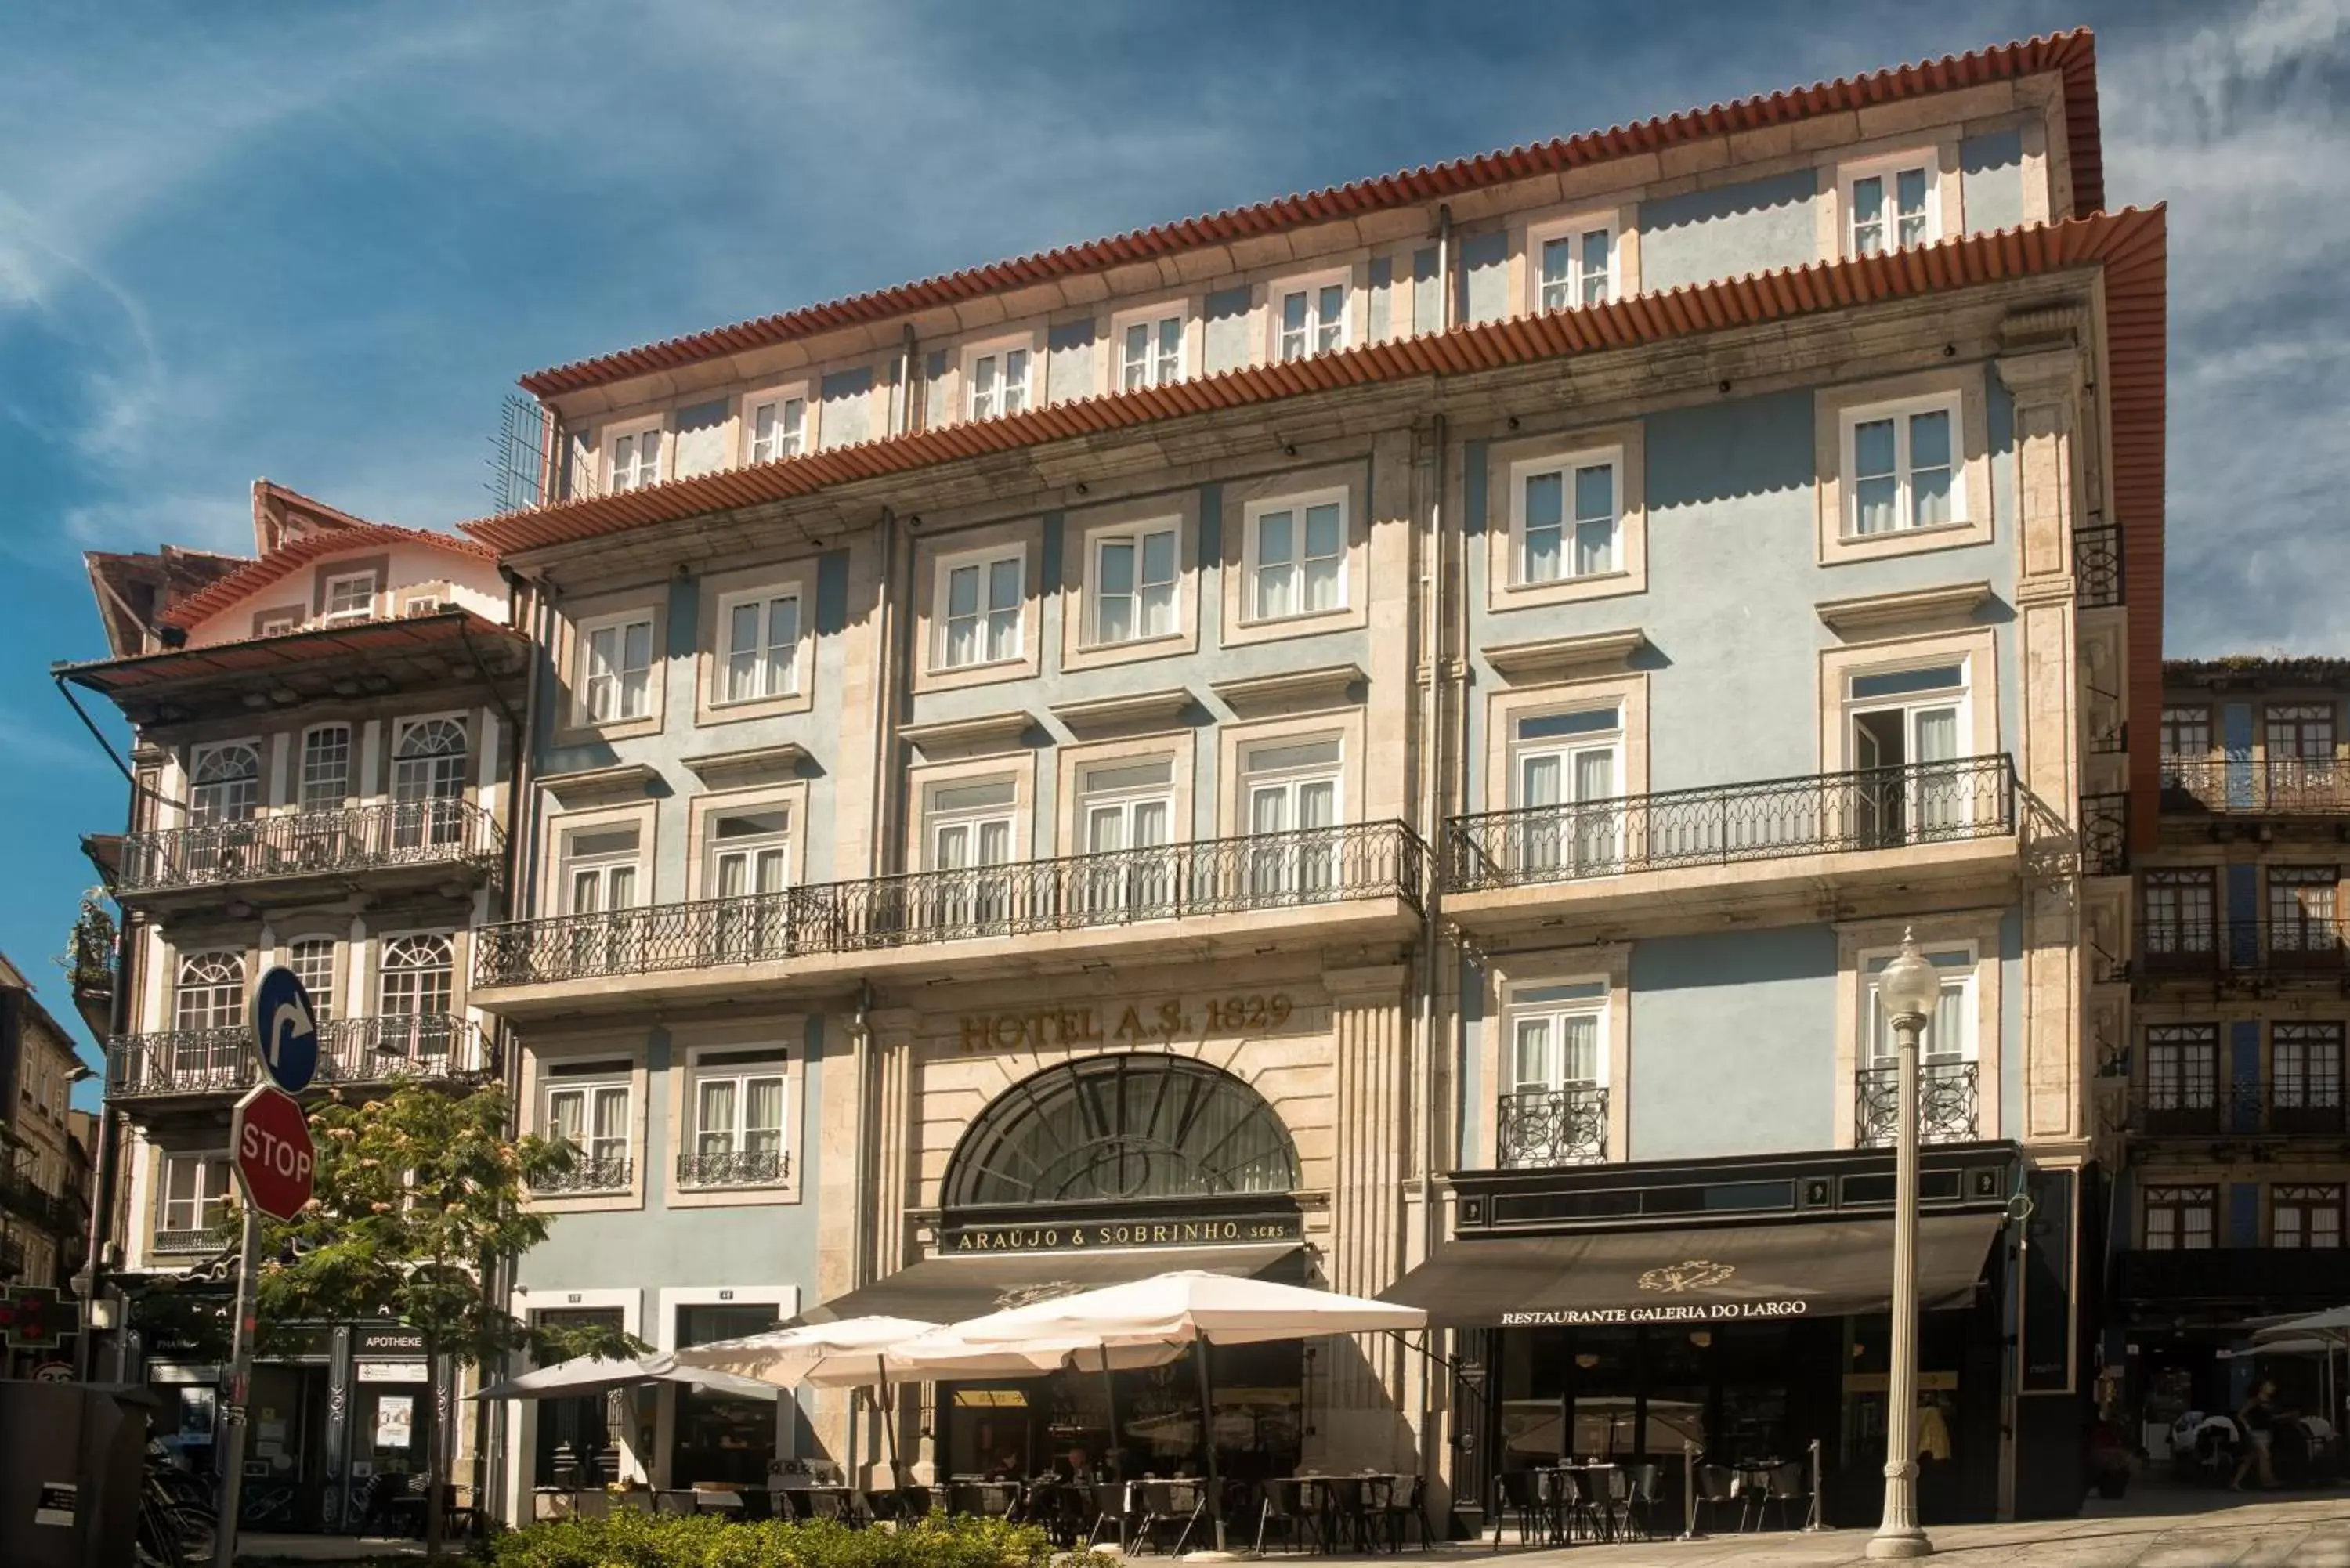 Property Building in Porto A.S. 1829 Hotel